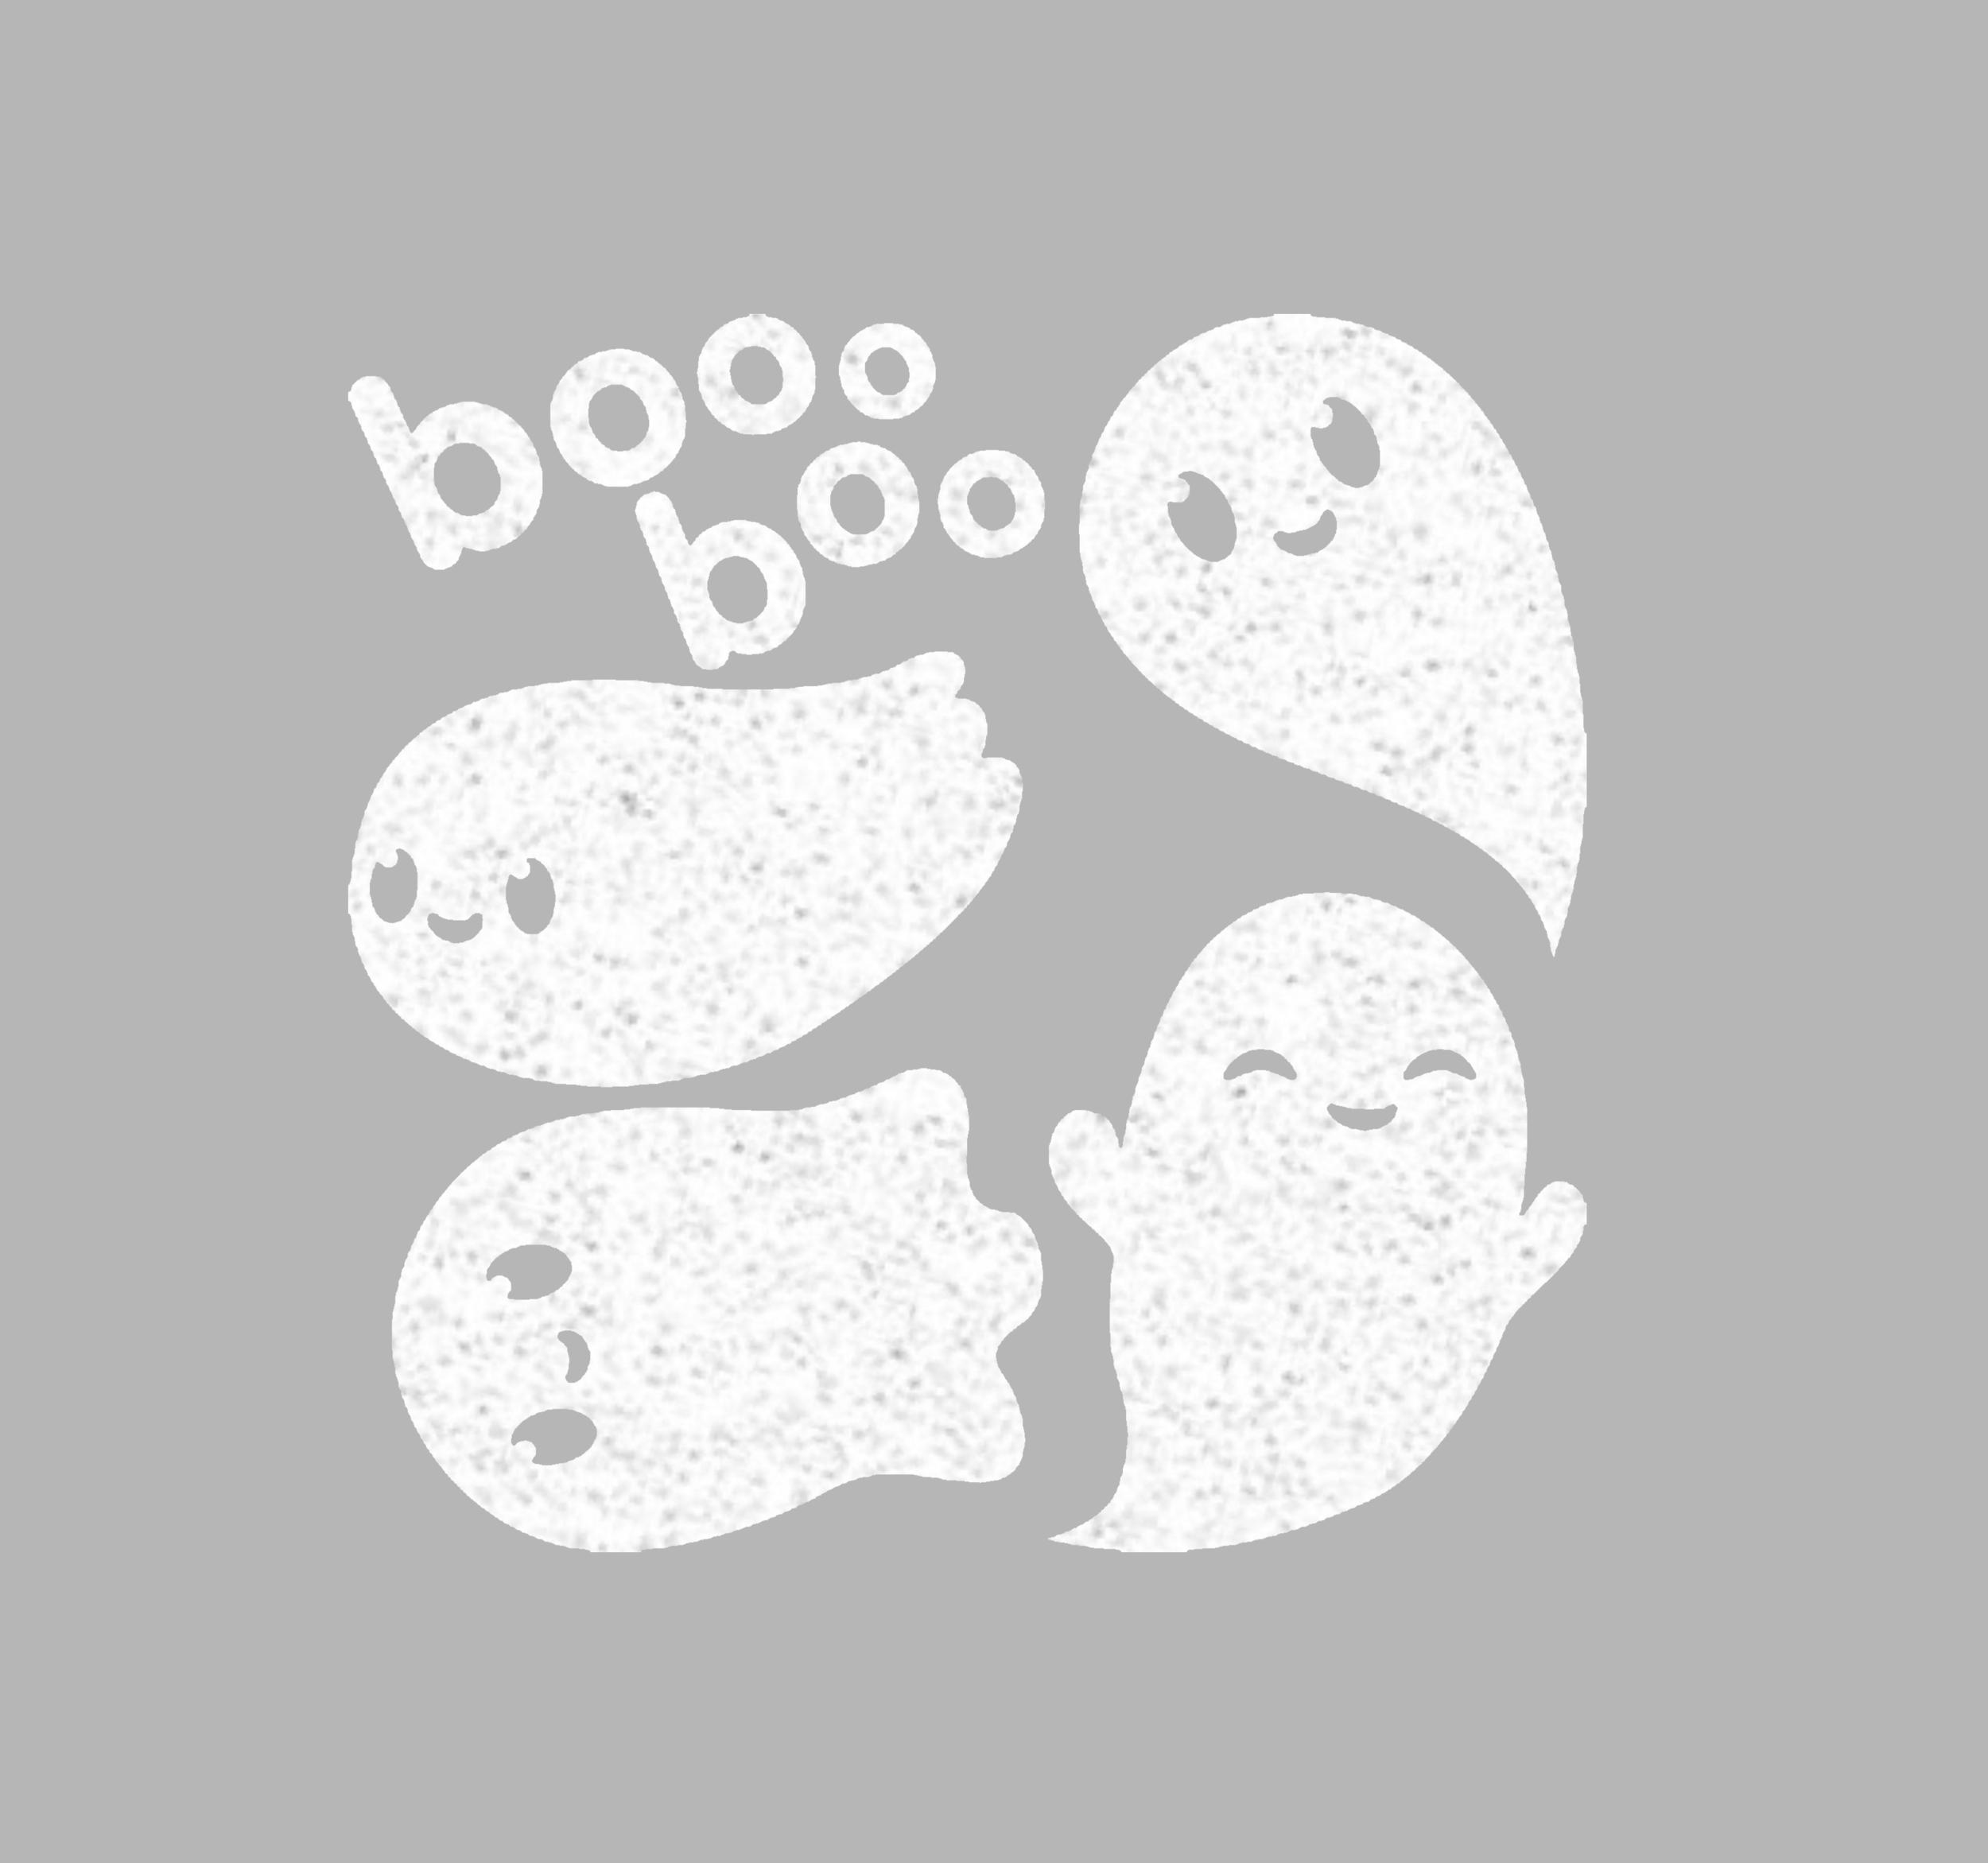 2000VBAP Fantômes Boo